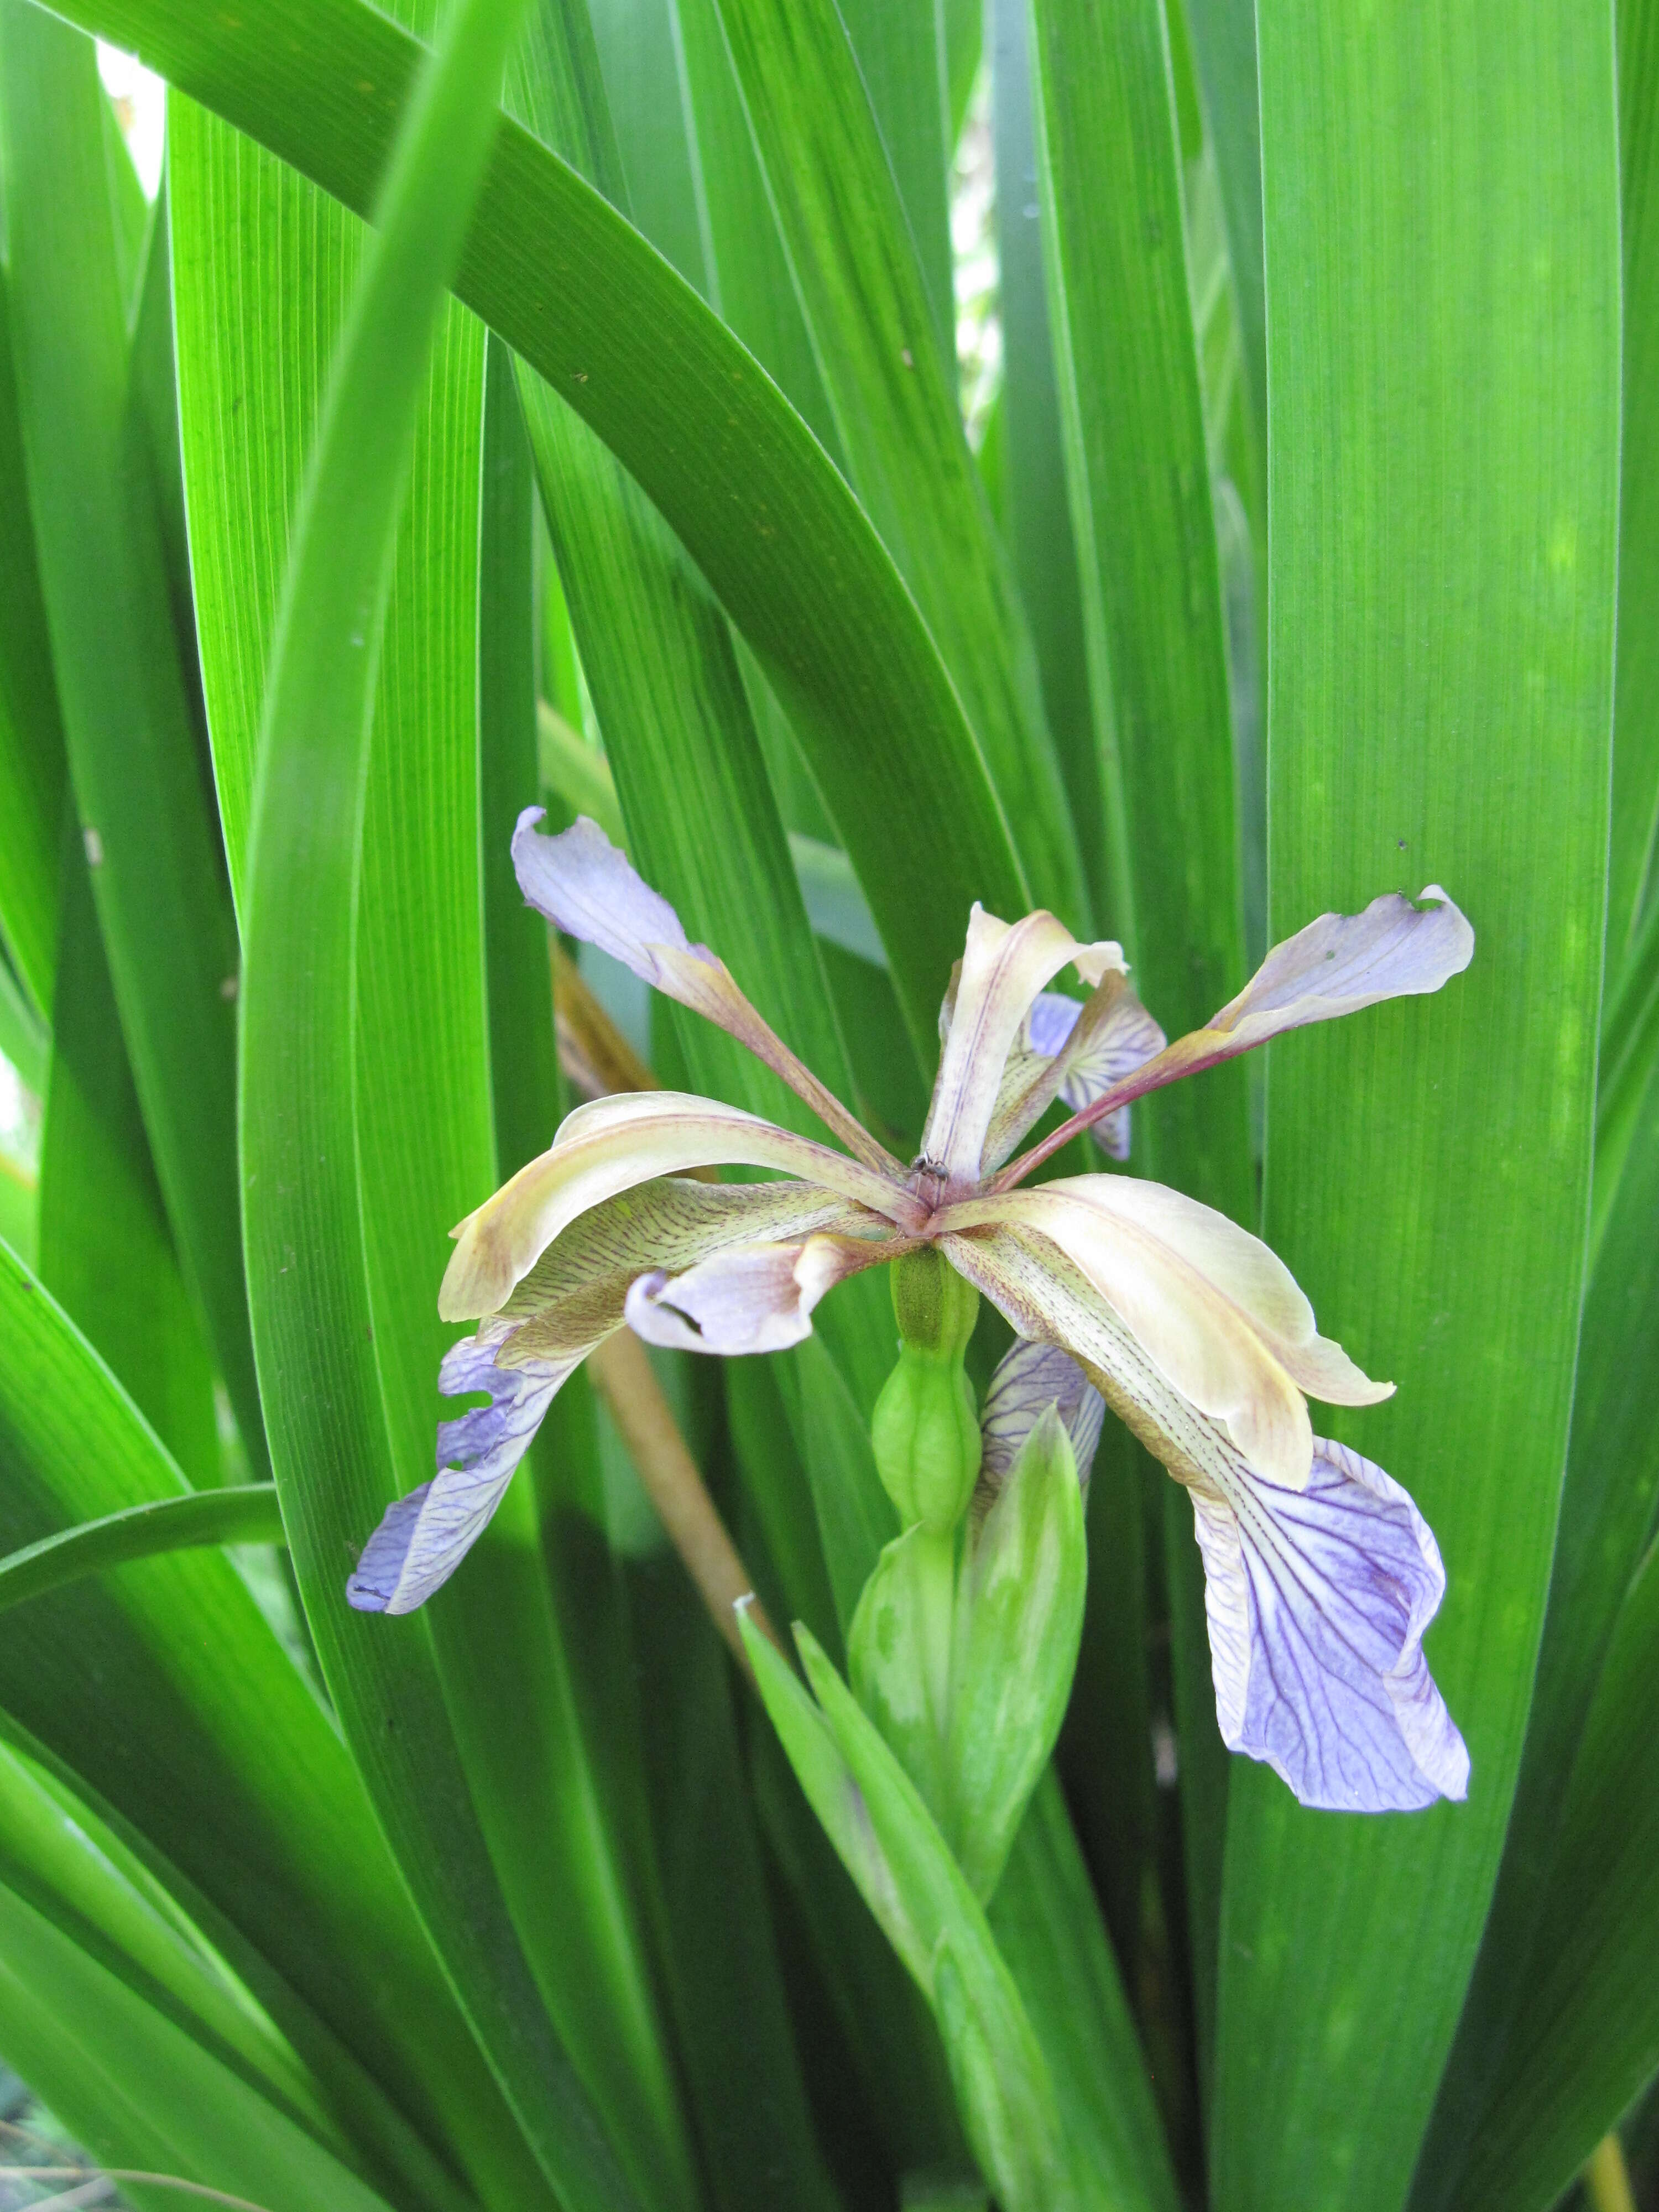 Image of stinking iris